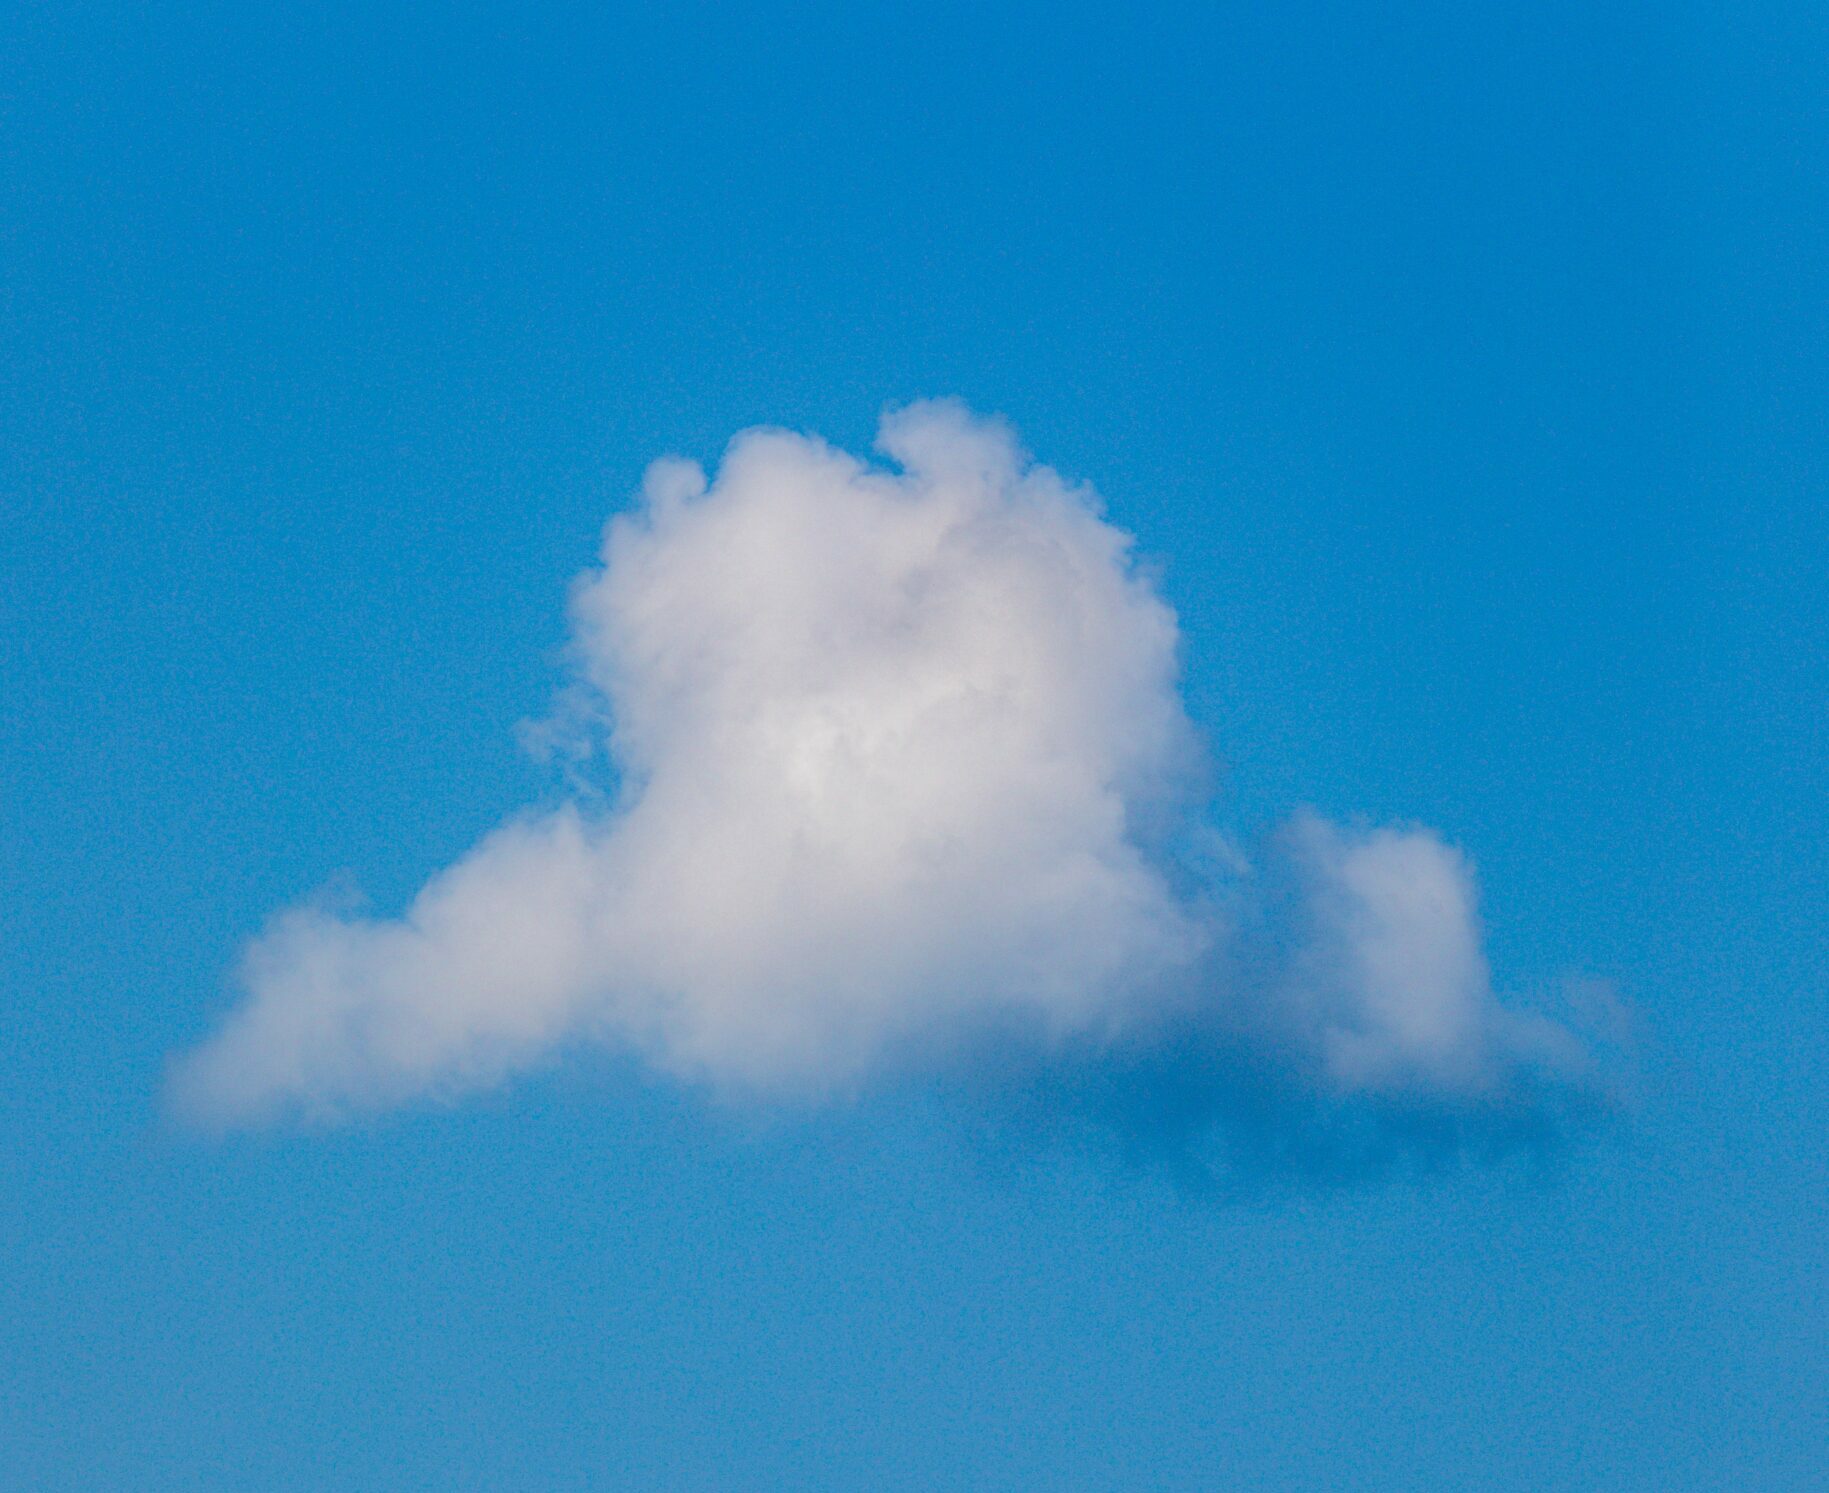 A singular cloud pictured against a blue sky | SAP